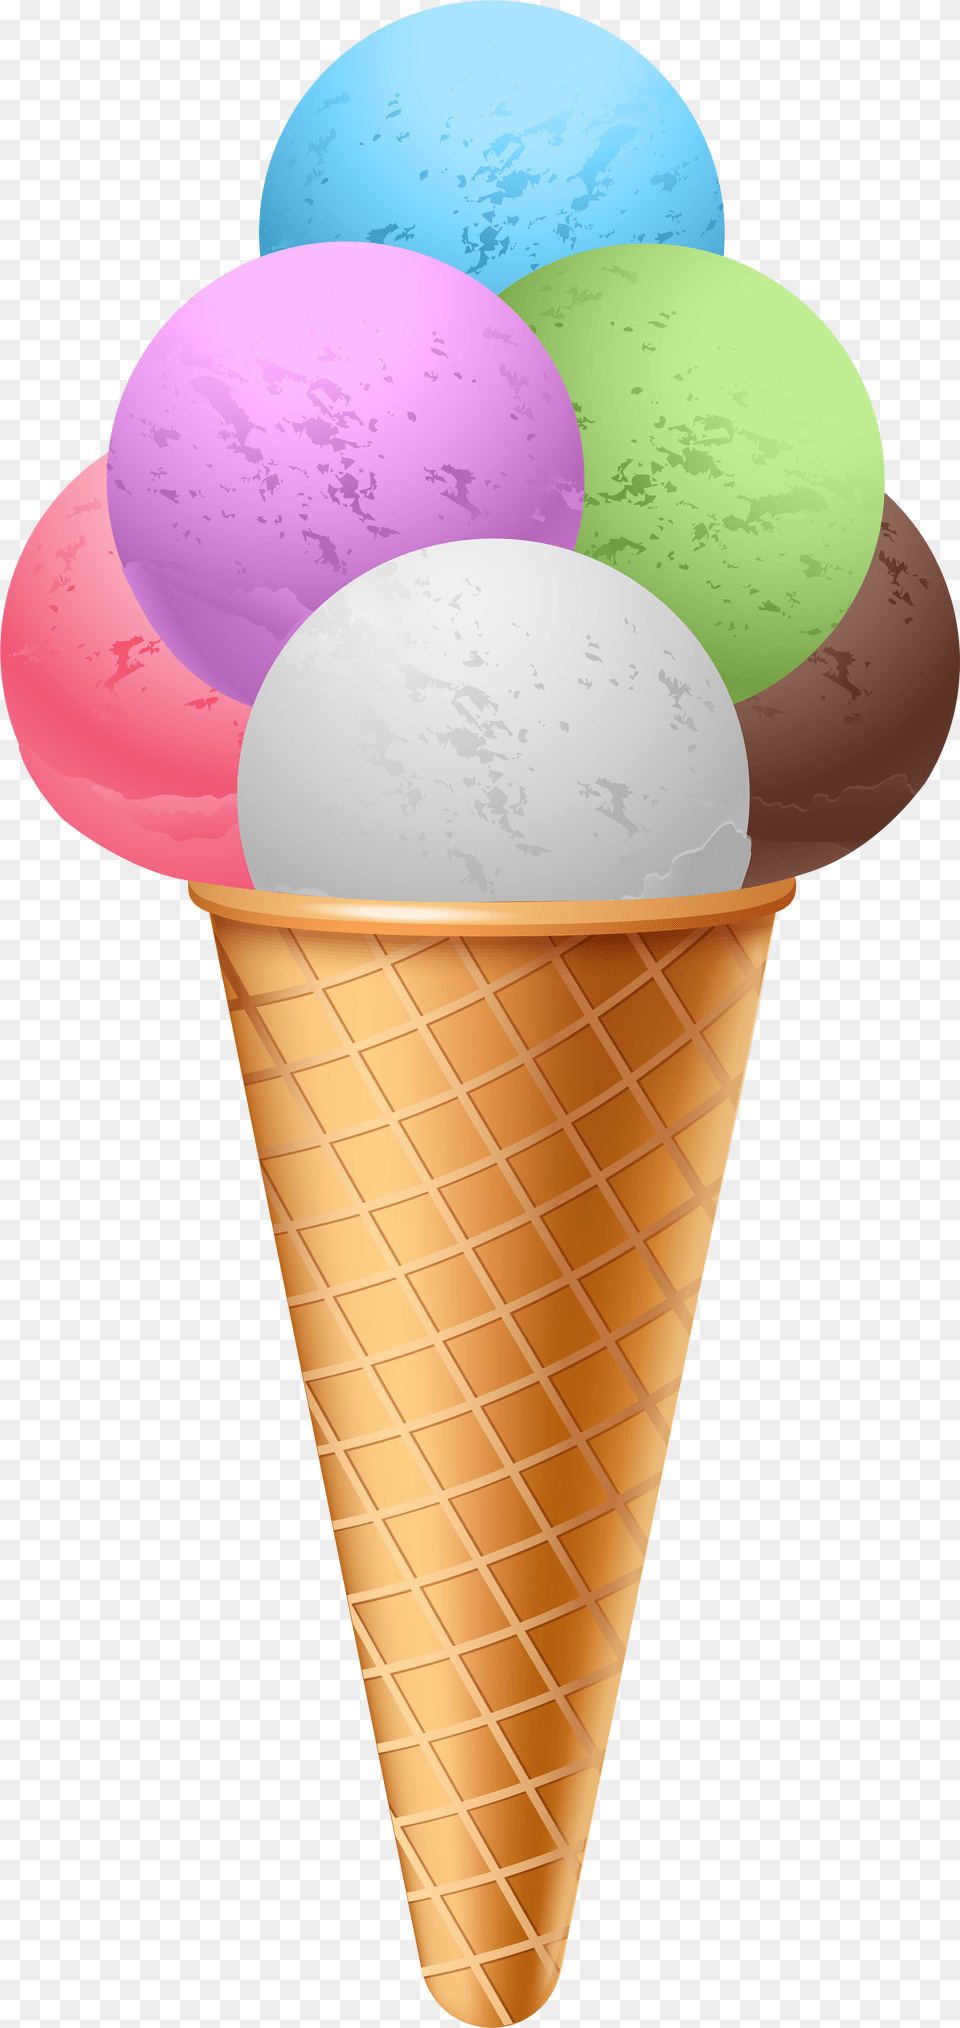 Ice Cream Scoop With Ice Cream Download Clipart Of Ice Cream Cone, Dessert, Food, Ice Cream, Balloon Free Png